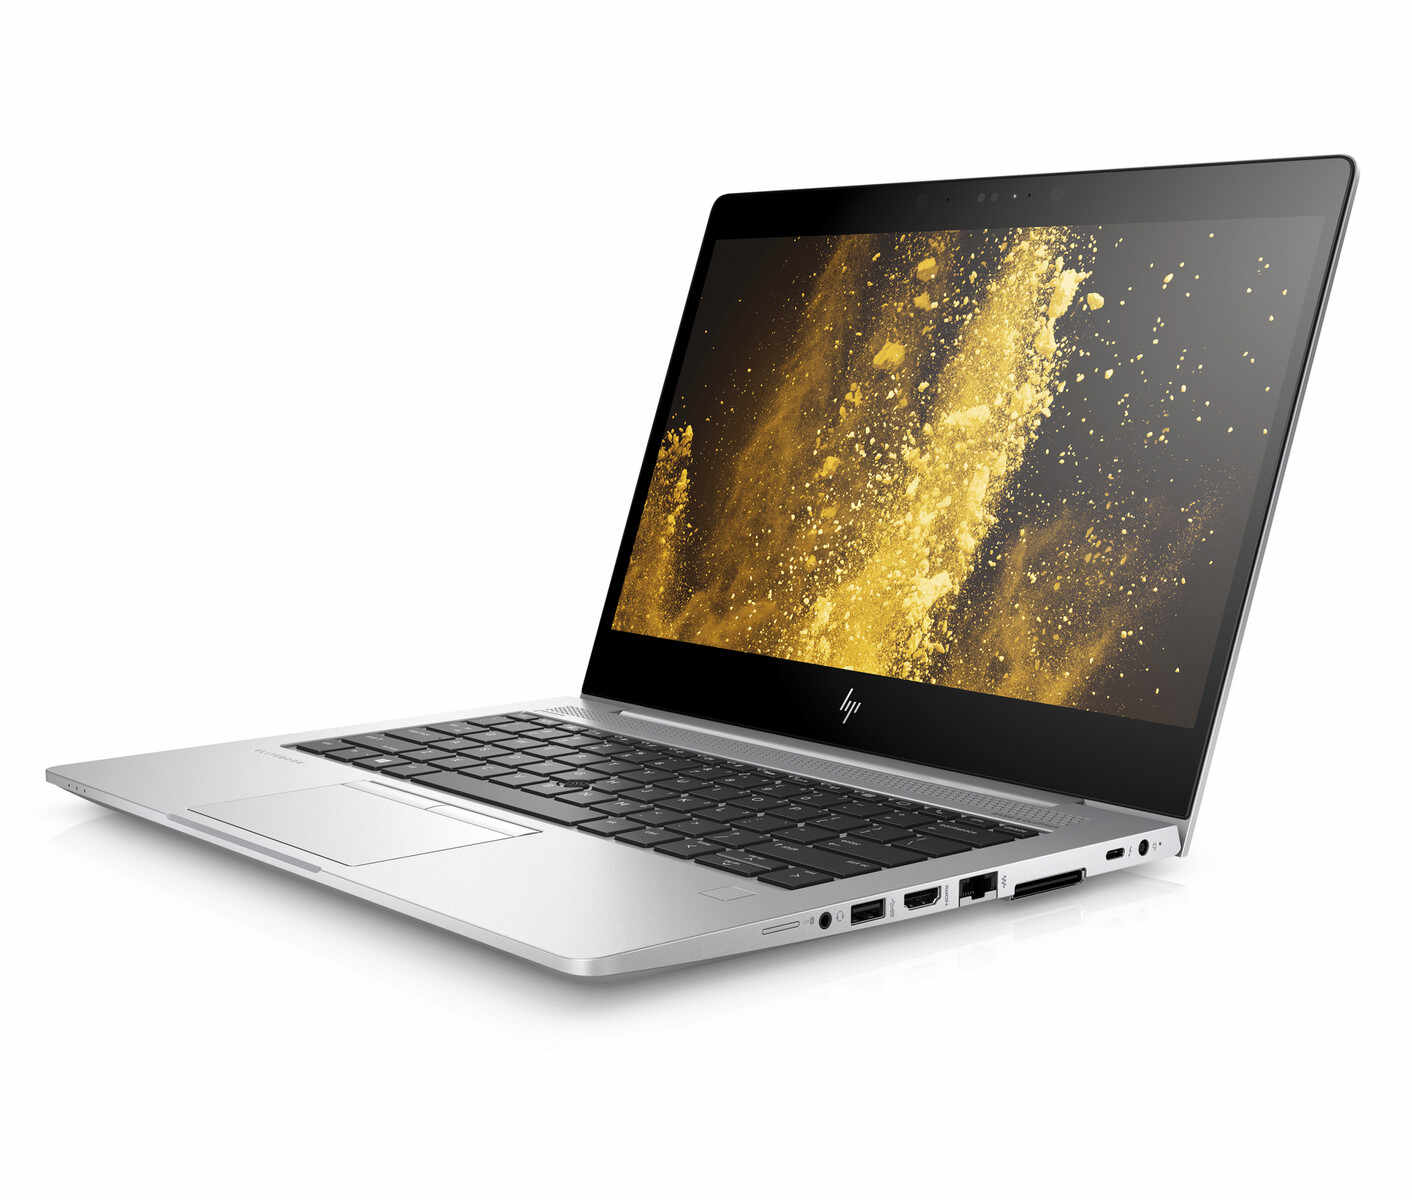 Laptop Second Hand HP EliteBook 830 G5, Intel Core i5-8350U 1.70 - 3.60GHz, 8GB DDR4, 240GB SSD, 13.3 Inch Full HD IPS, Webcam